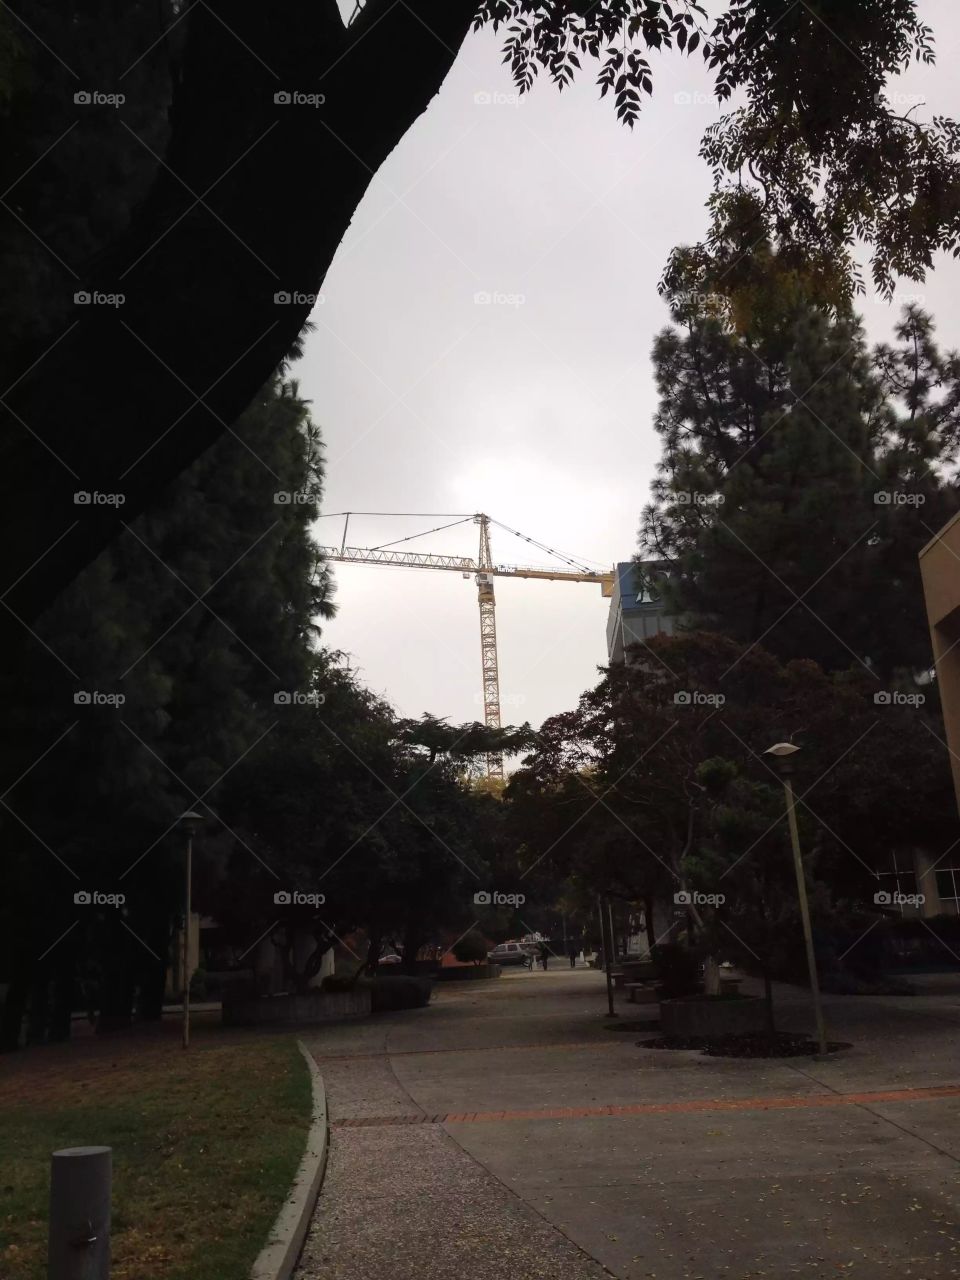 Crane on a rainy day